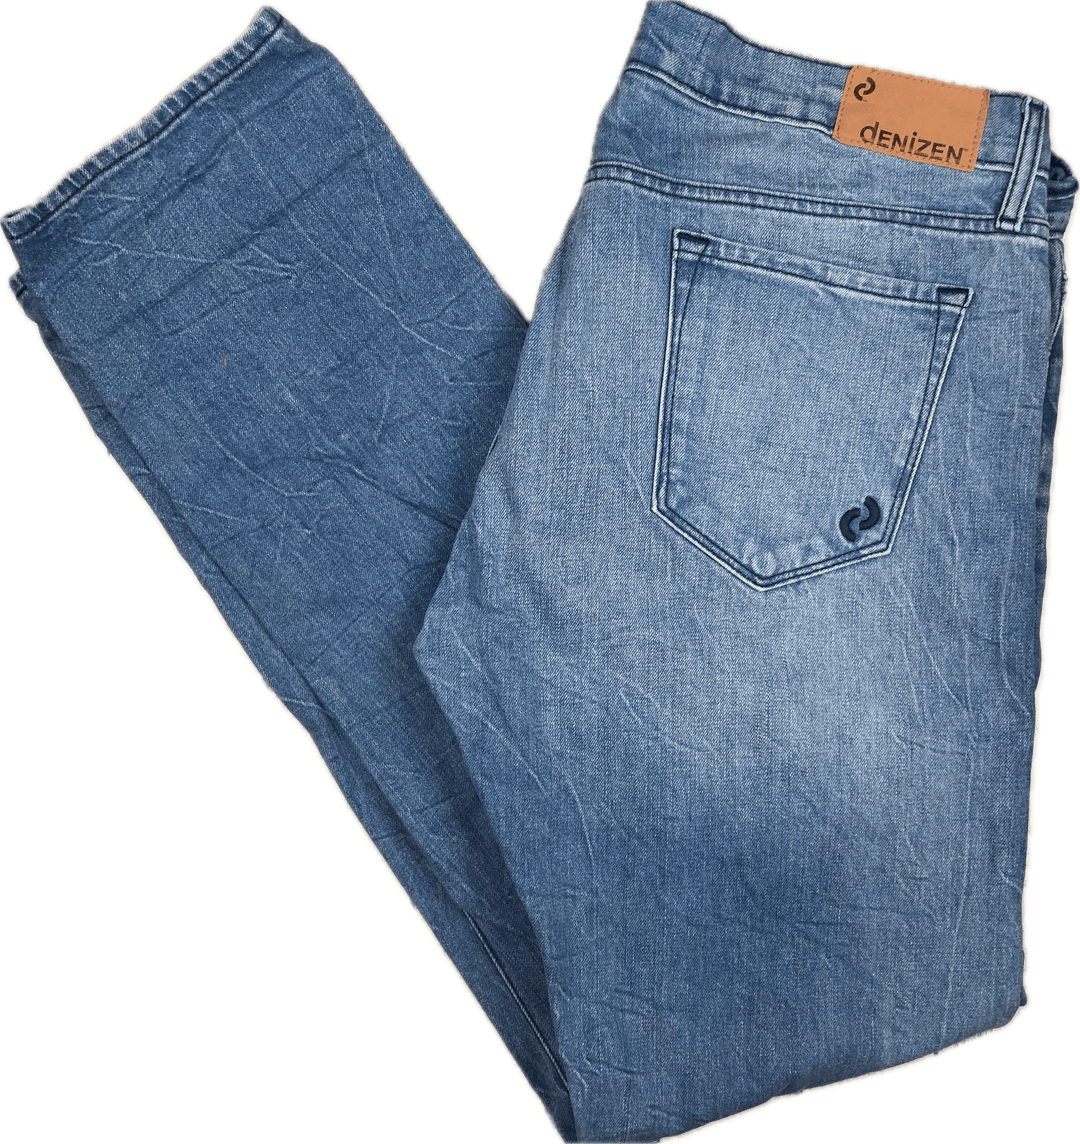 Levis Denizen 208 Skinny Fit Denim Jeans - Size 36/34 - Jean Pool